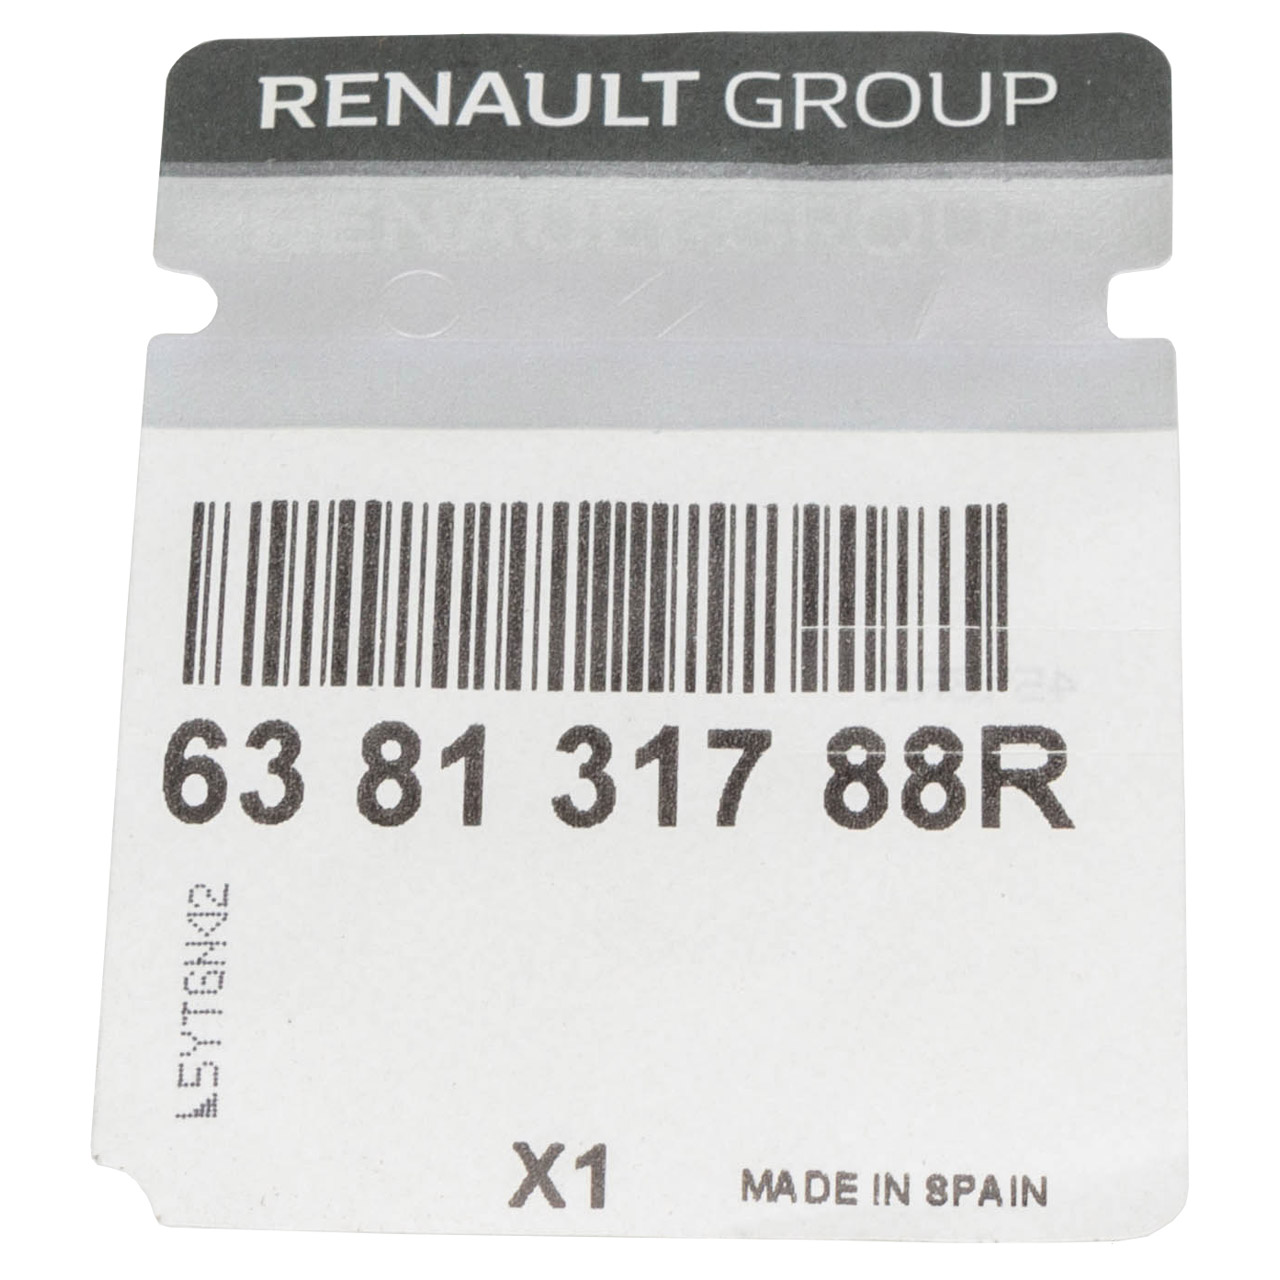 ORIGINAL Renault Verbreiterung Radlauf Captur 1 vorne links 638131788R